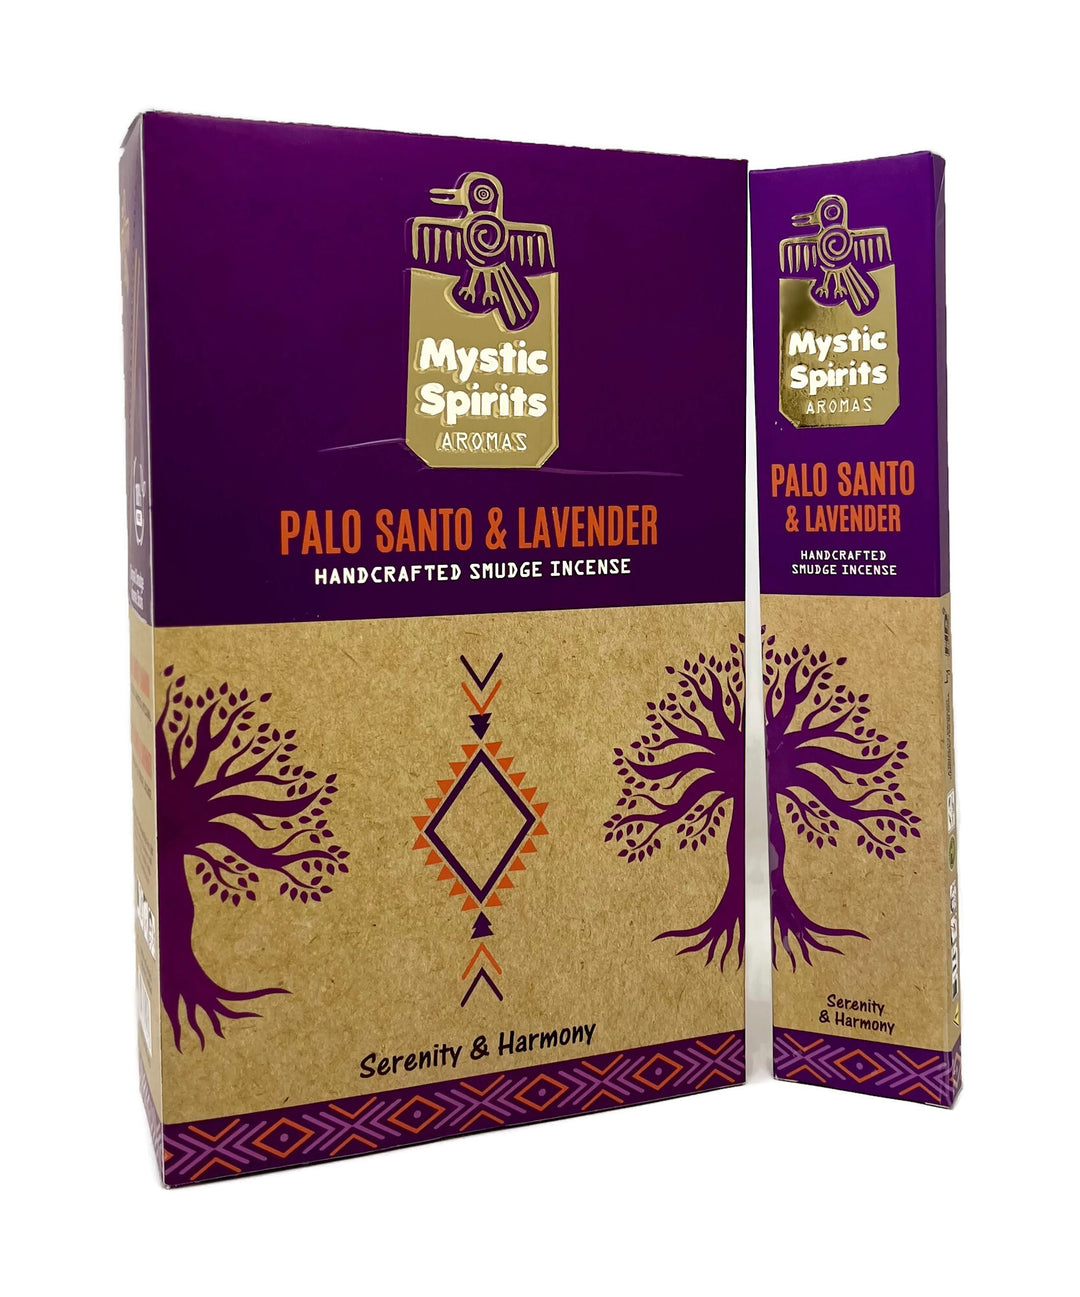 Mystic Spirits Aroma -  Palo Santo & Lavender Handcrafted Smudge Incense